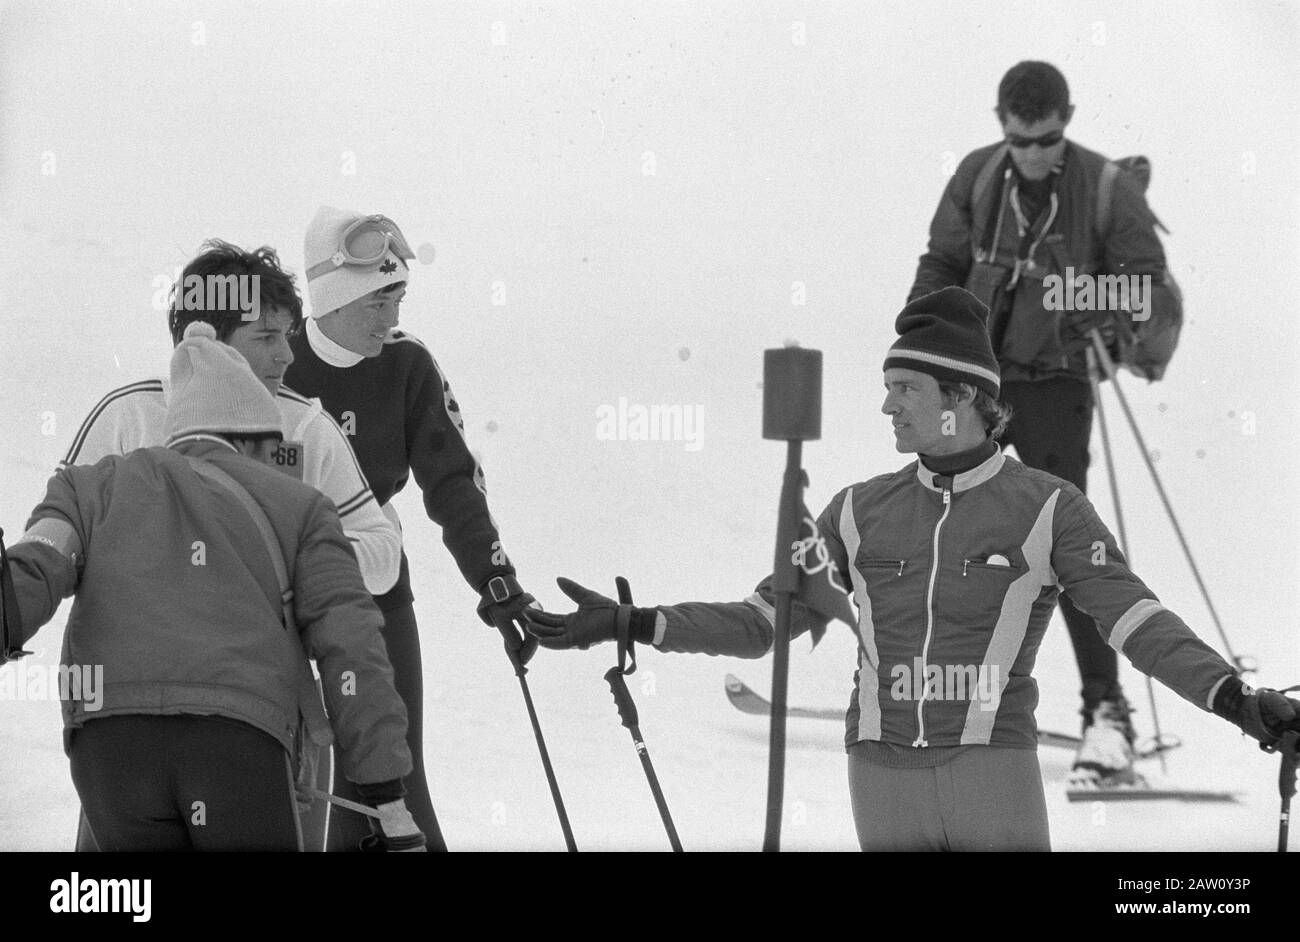 Olympics Grenoble, Jean Claude Killy Date: February 13, 1968